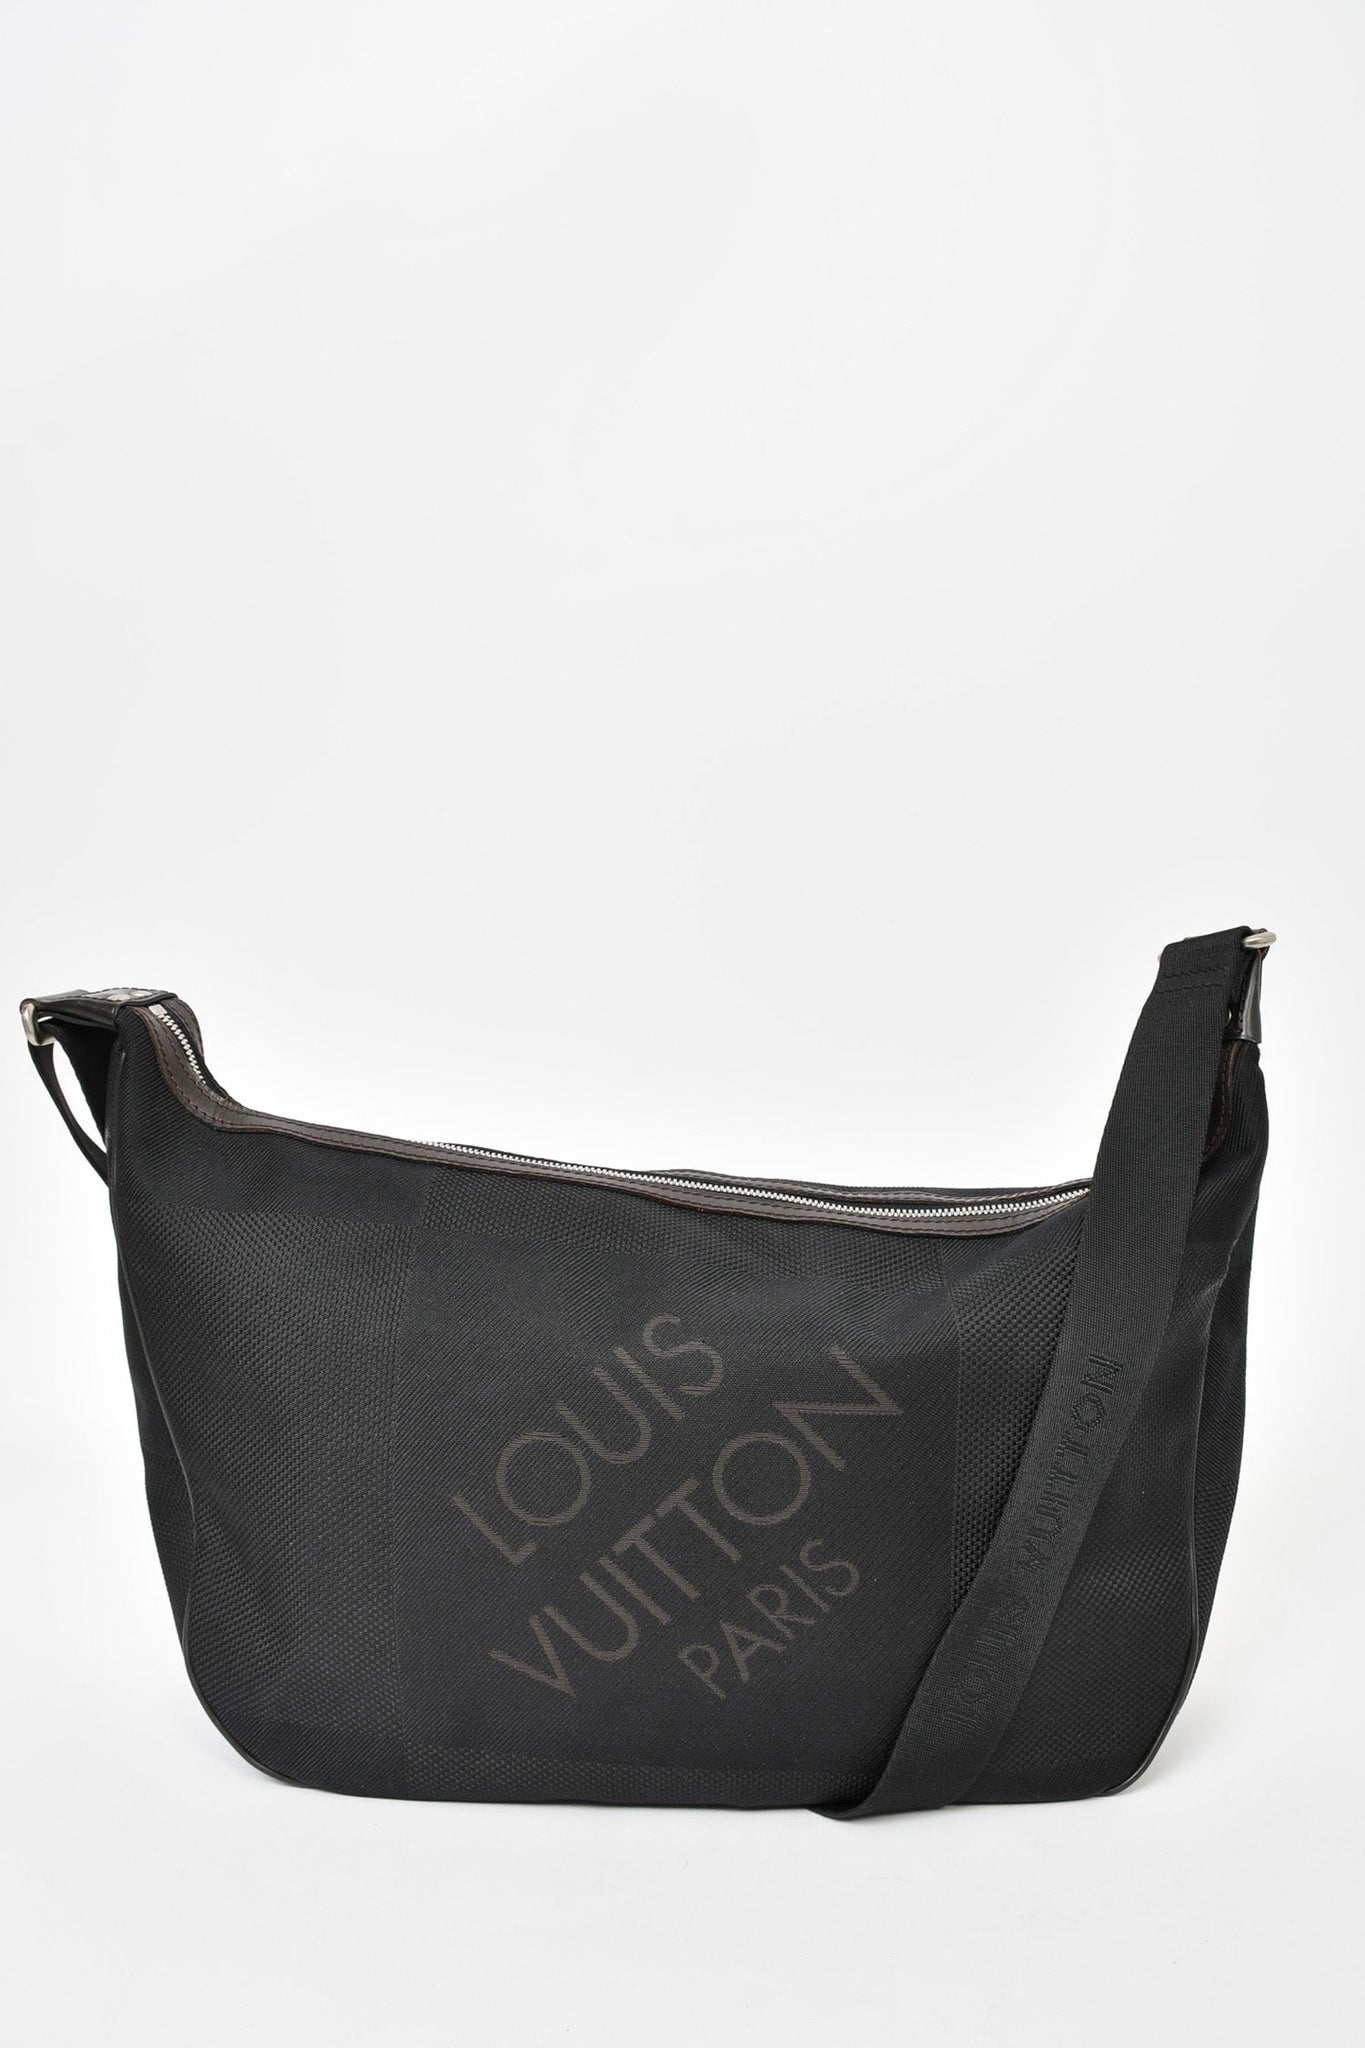 Louis Vuitton Terre Monogram Empreinte Virtuose Wallet Louis Vuitton